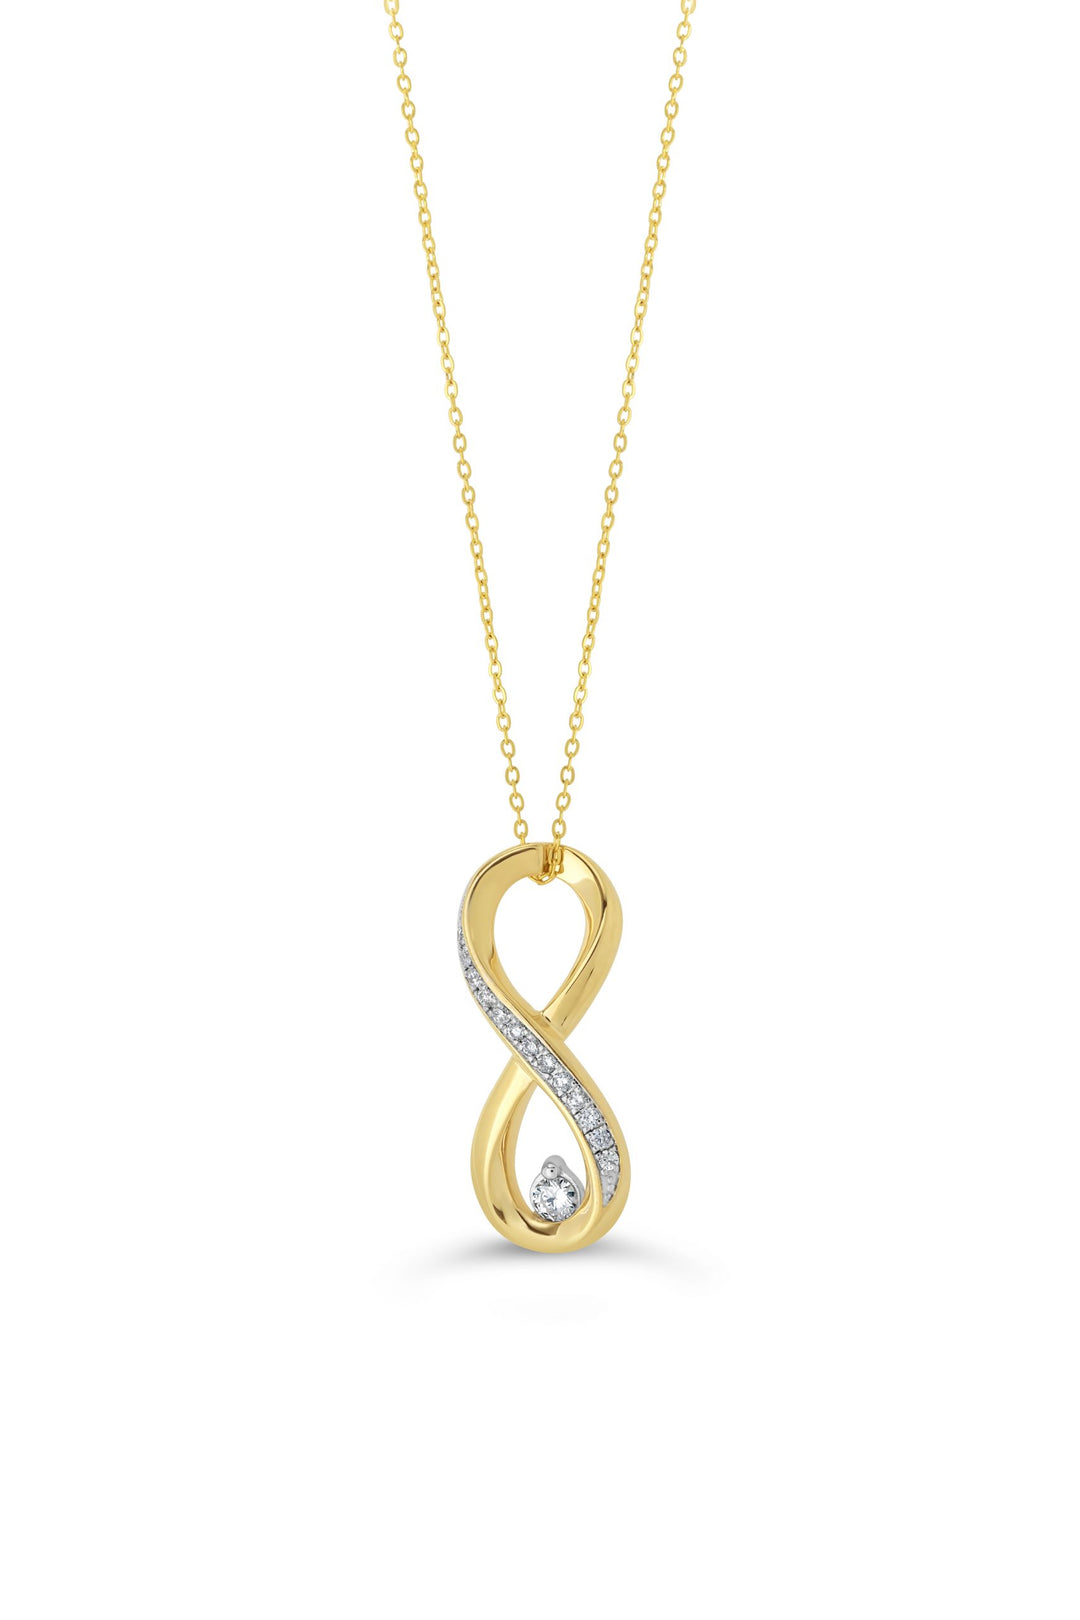 10K Yellow Gold Diamond Infinity Pendant with Chain